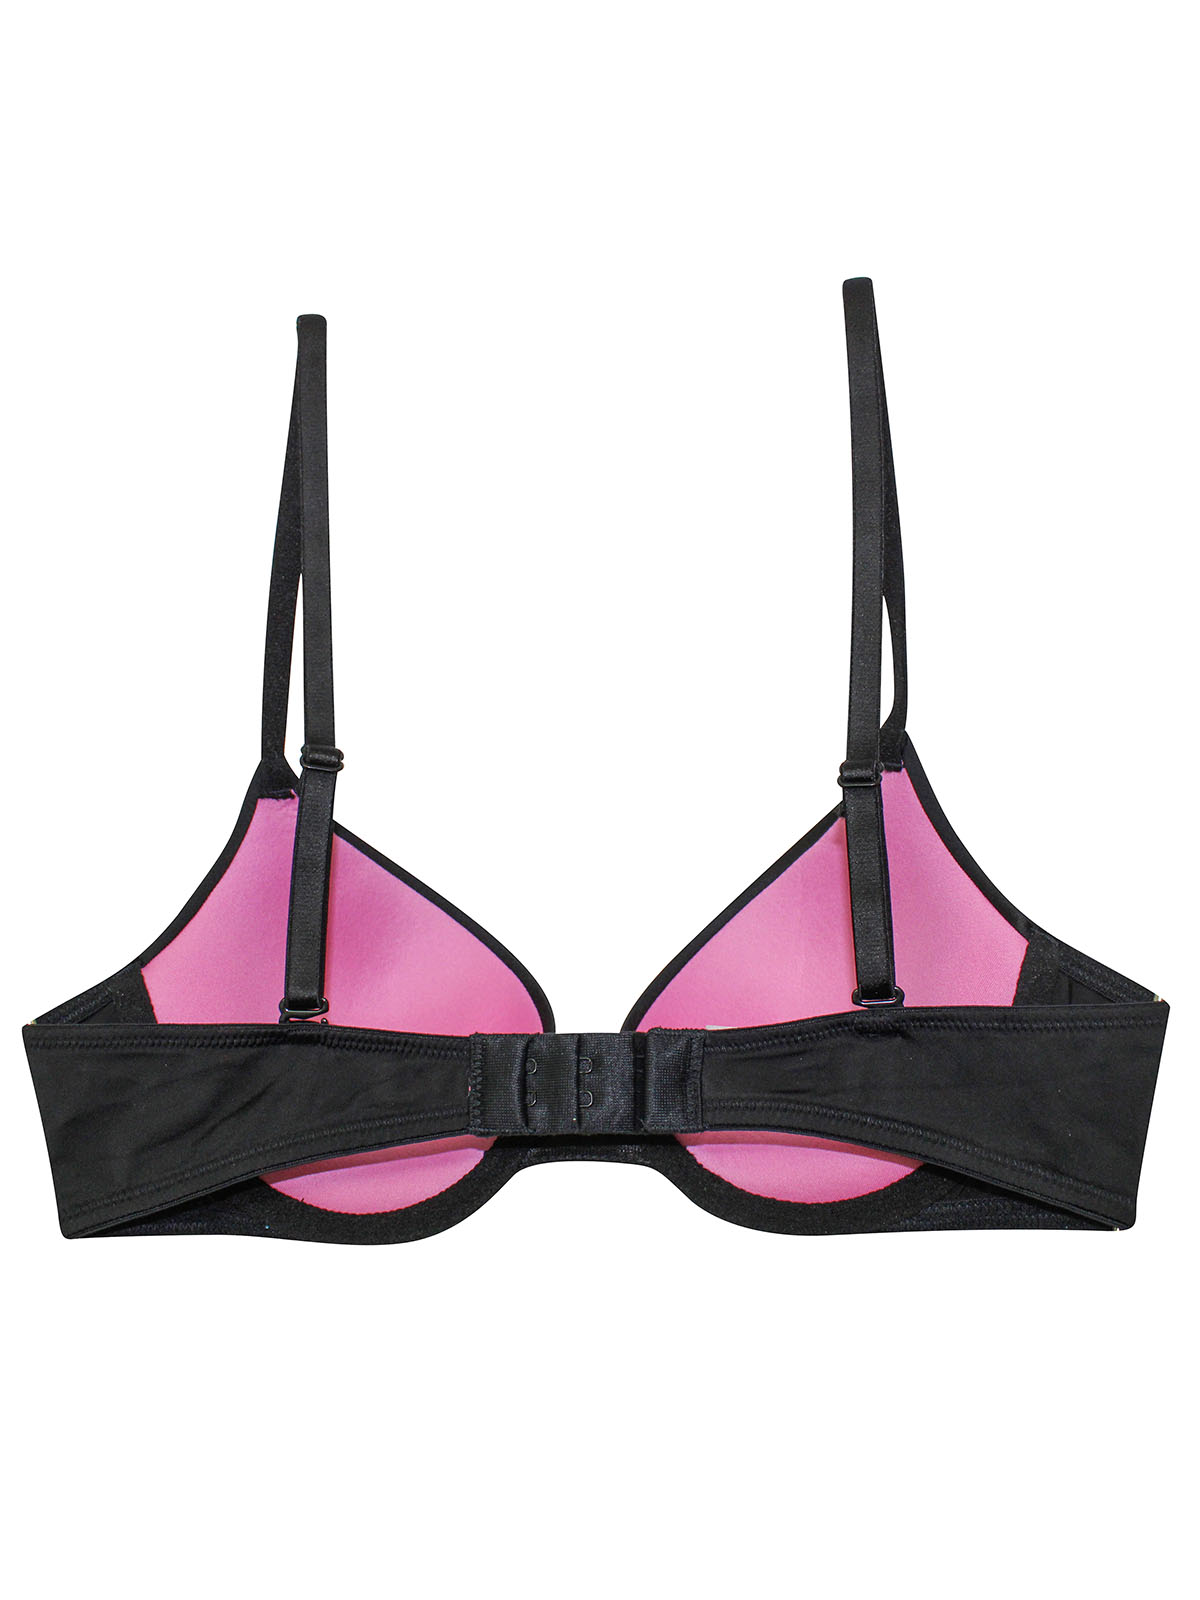 Victoria Secret Black and Pink Bra 36B